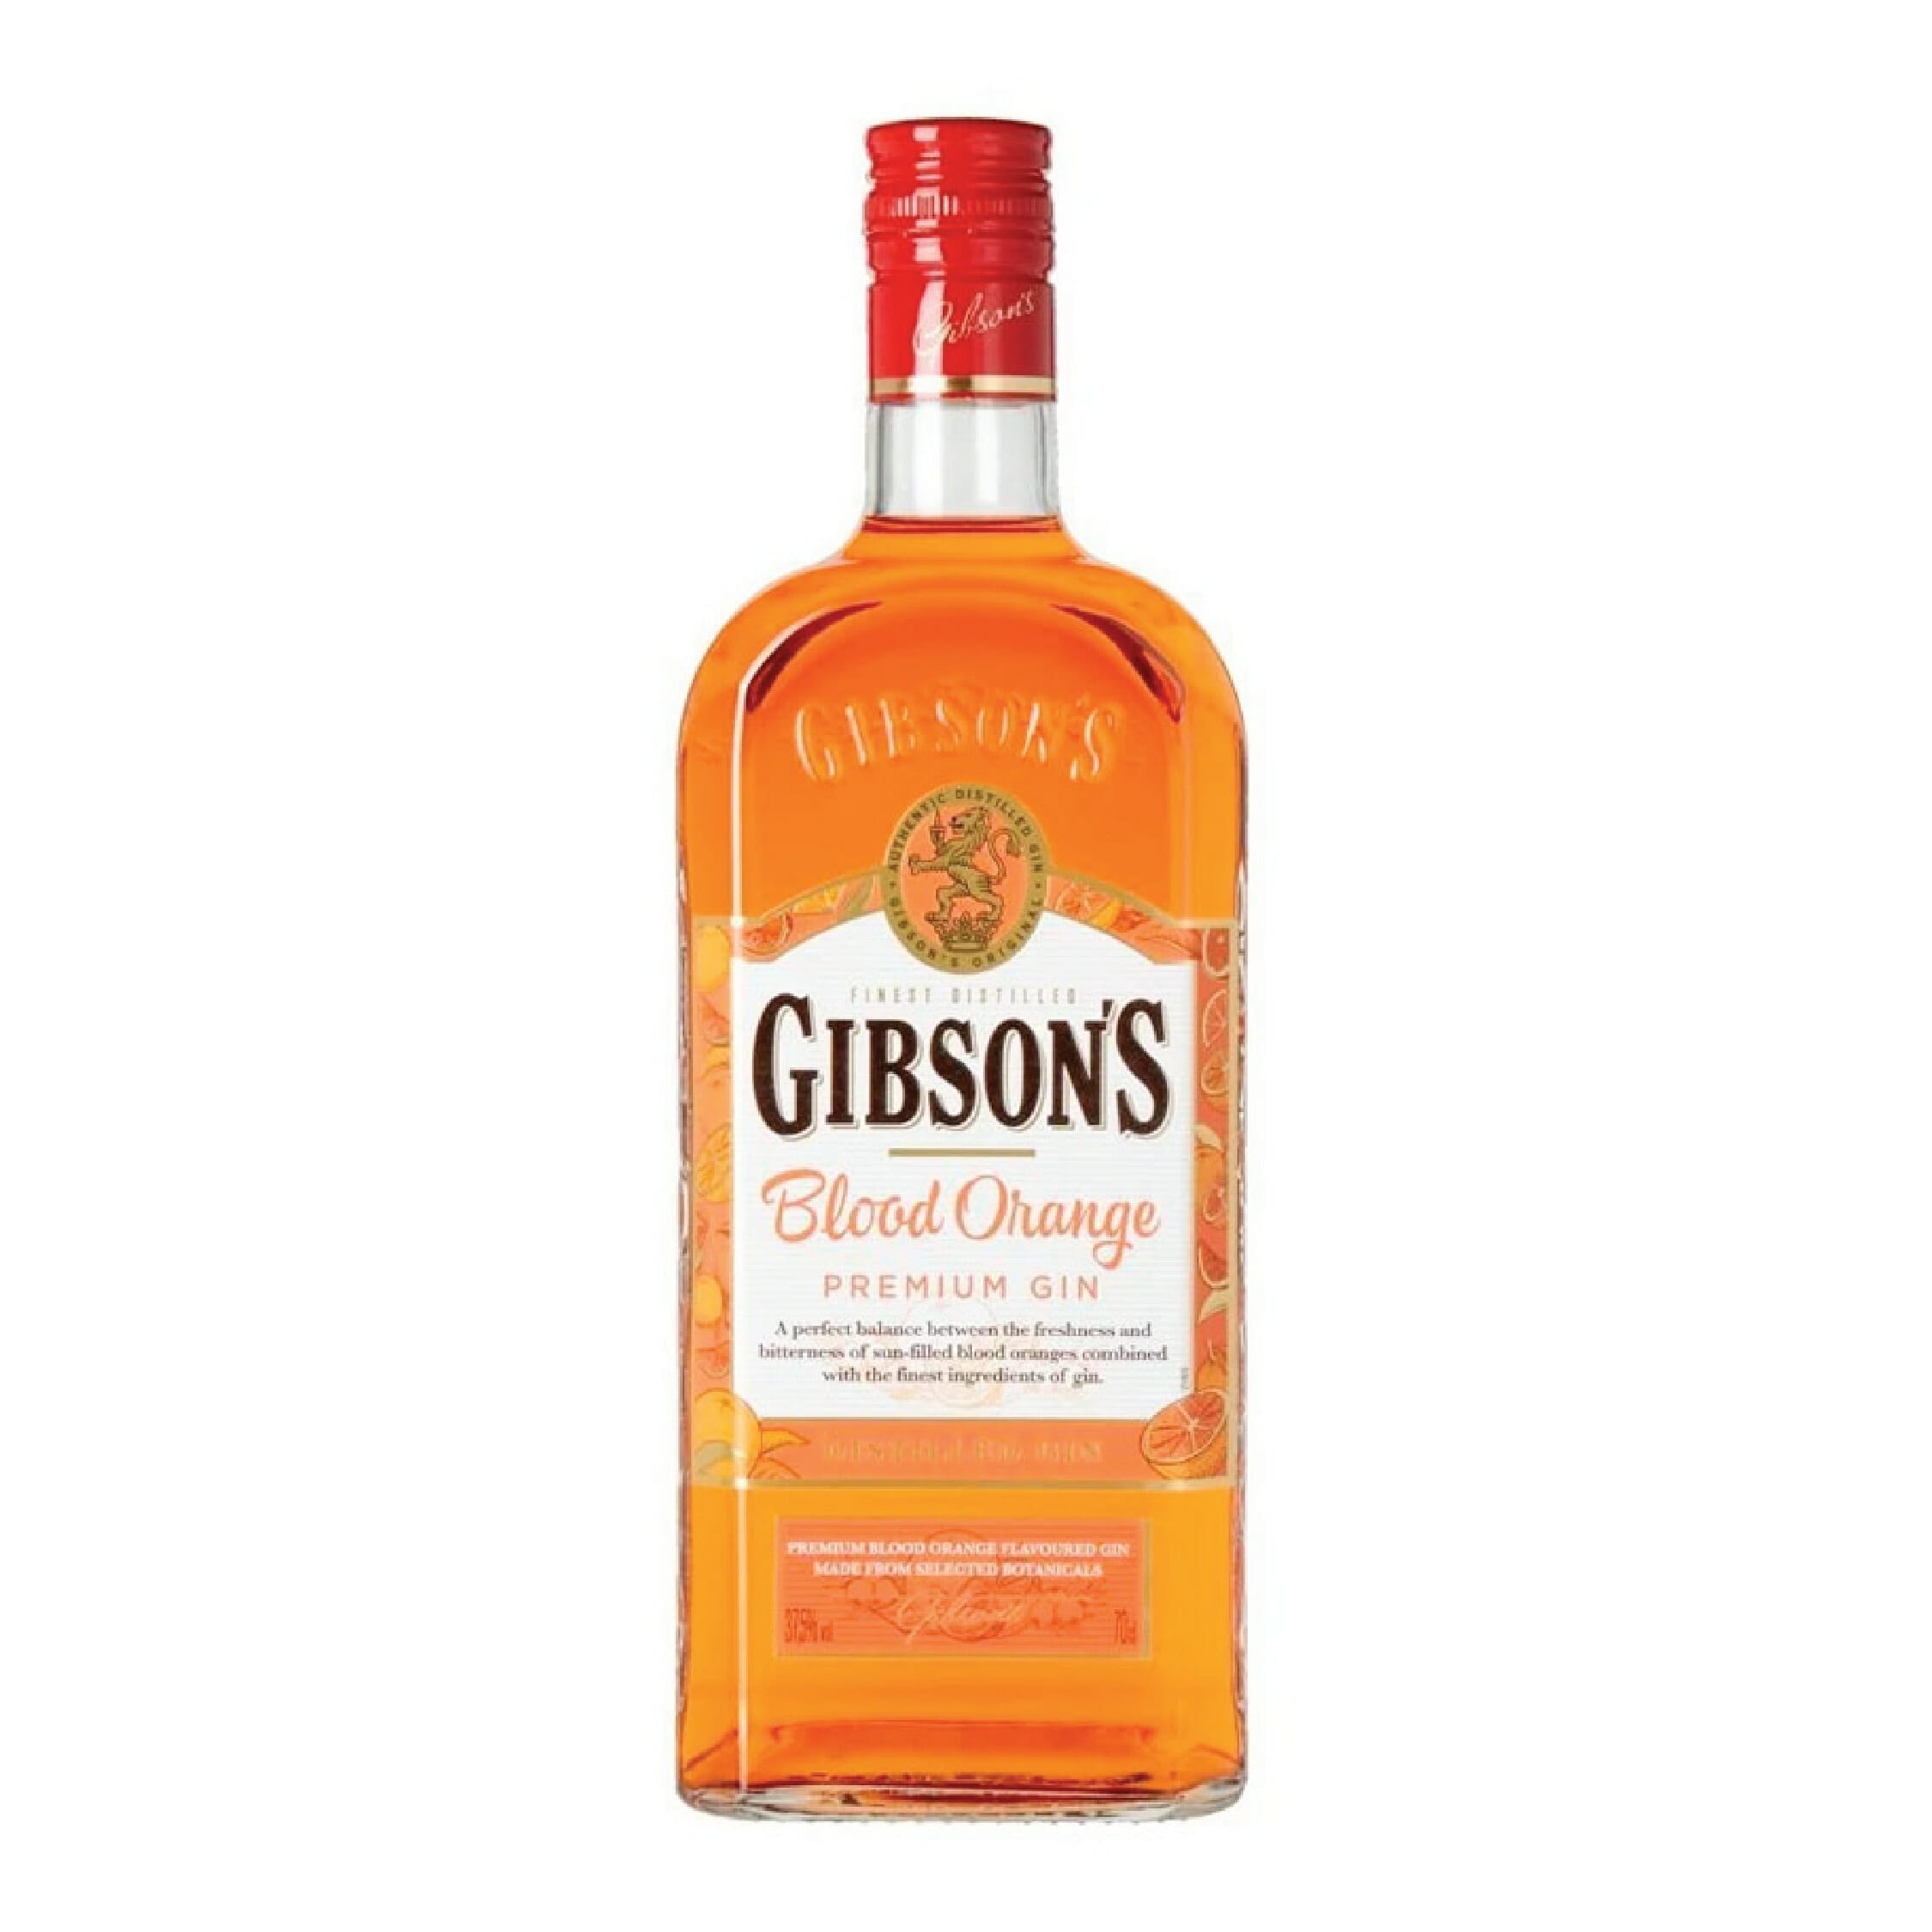 Gibsons Gin Blood Orange 700ml